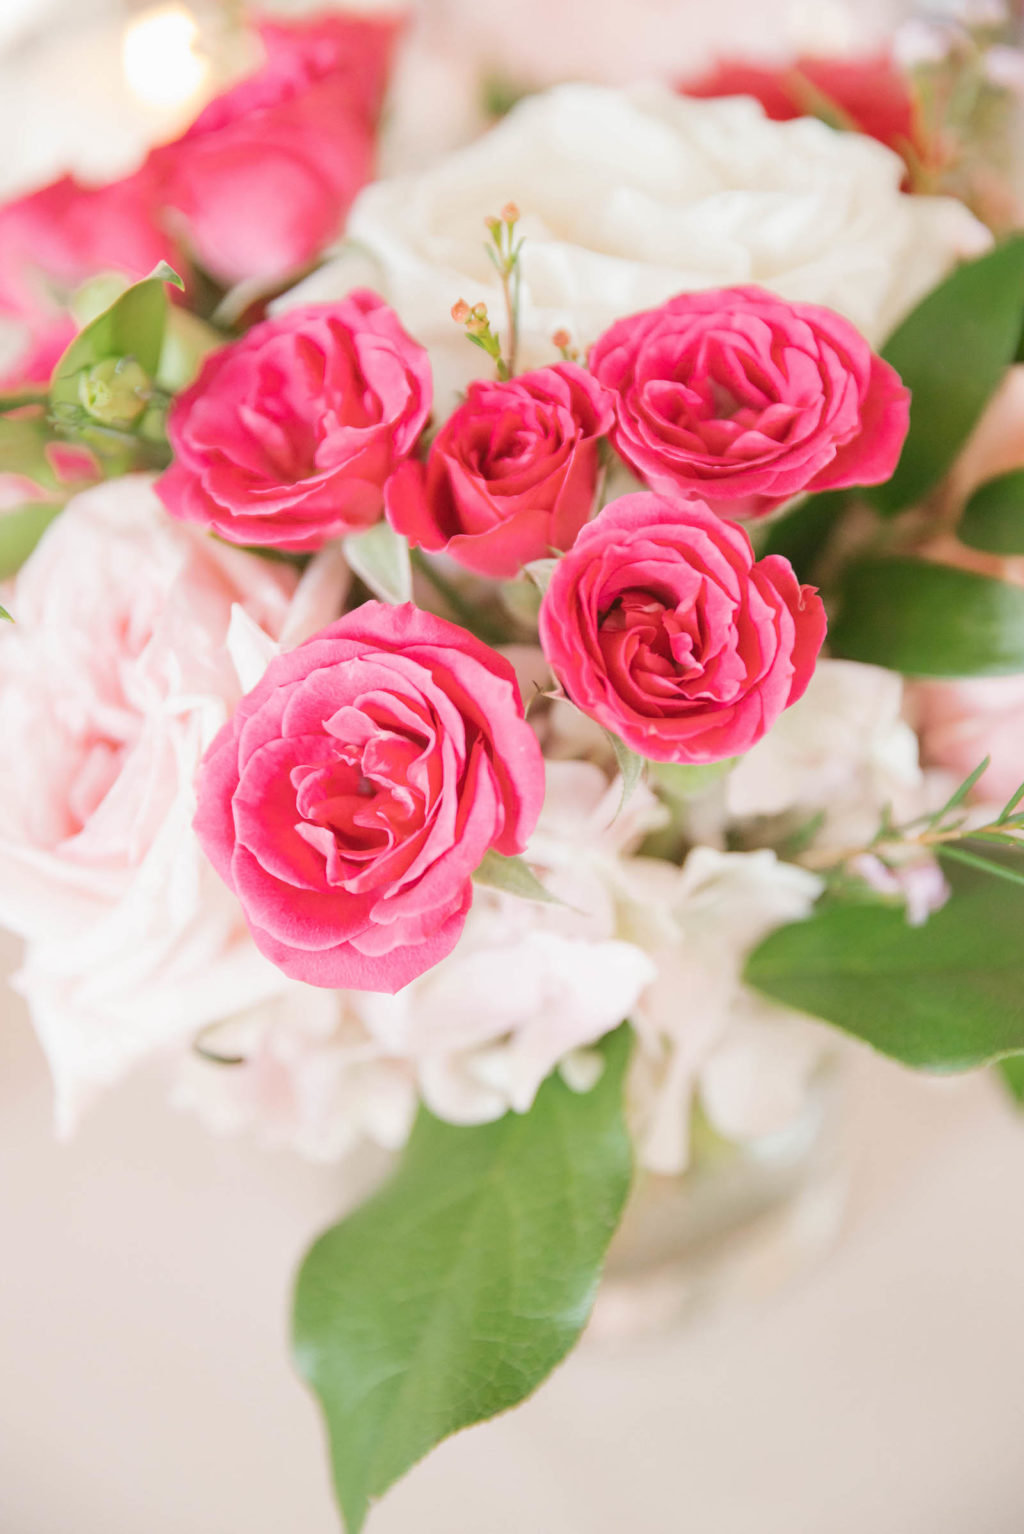 Vibrant Pink and Blush Roses Floral Centerpiece Wedding Reception Decor | Tampa Bay Wedding Florist Bruce Wayne Florals